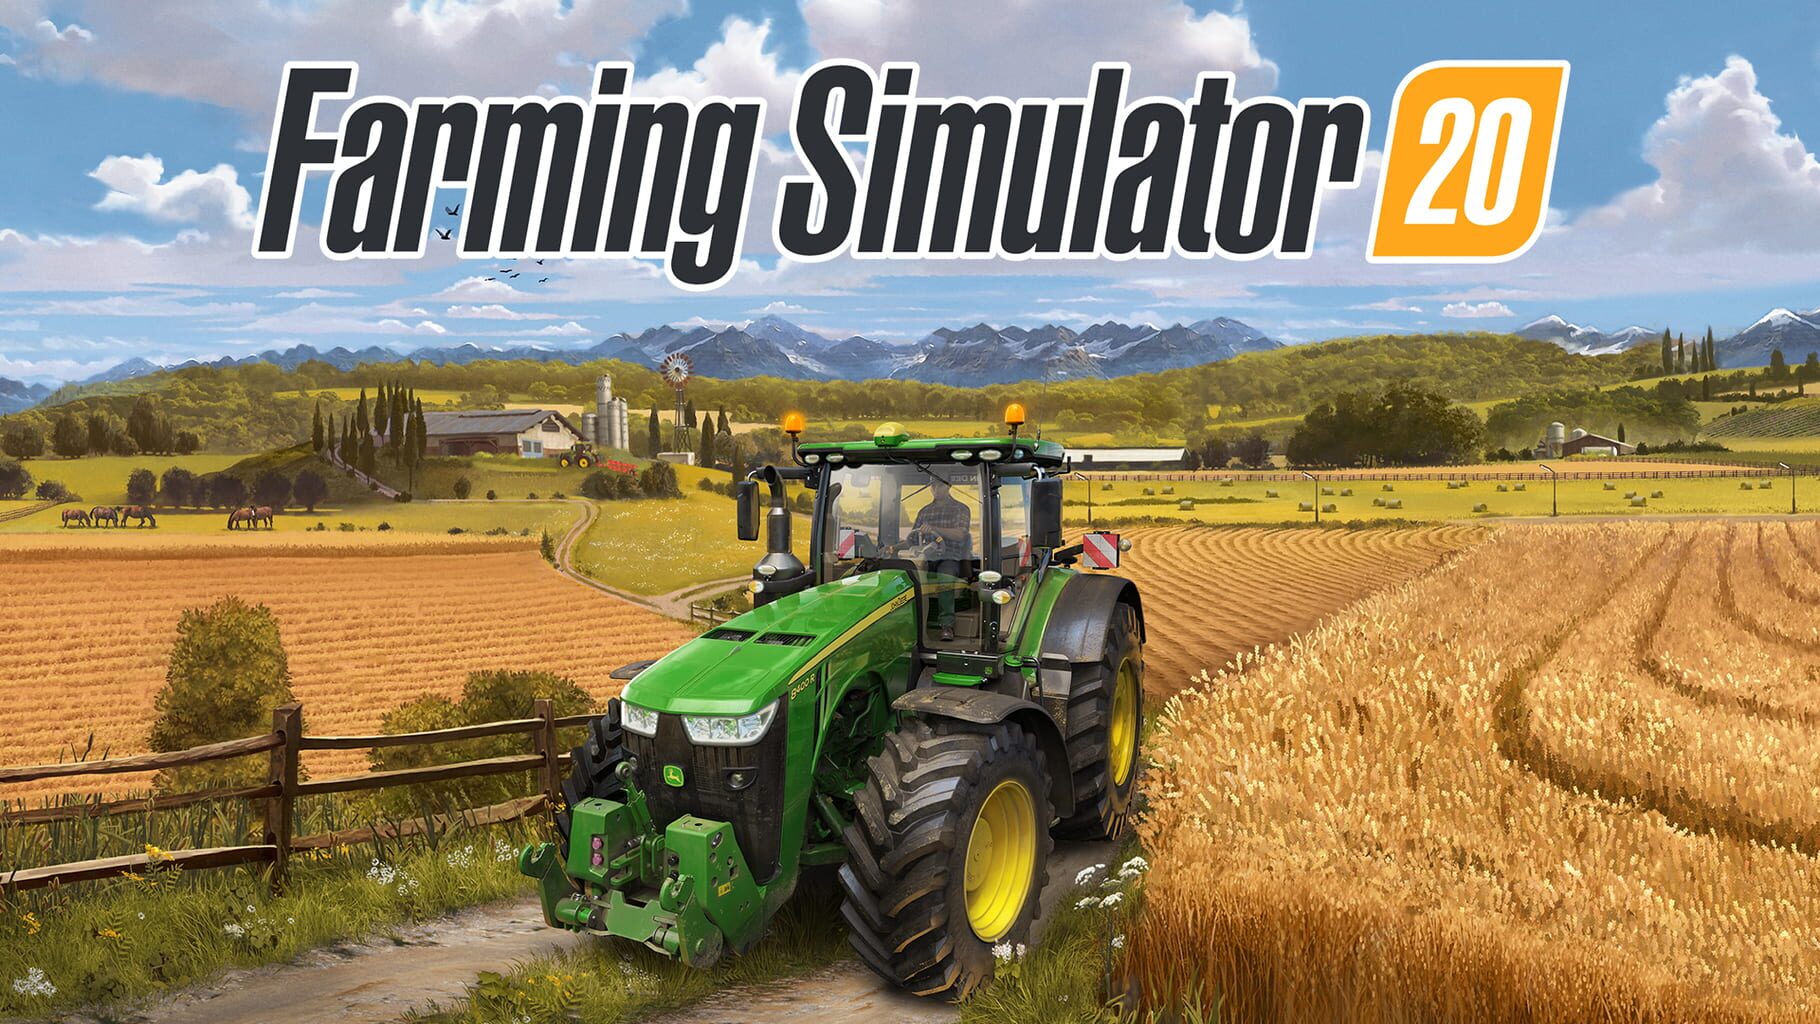 Farming Simulator 20 artwork